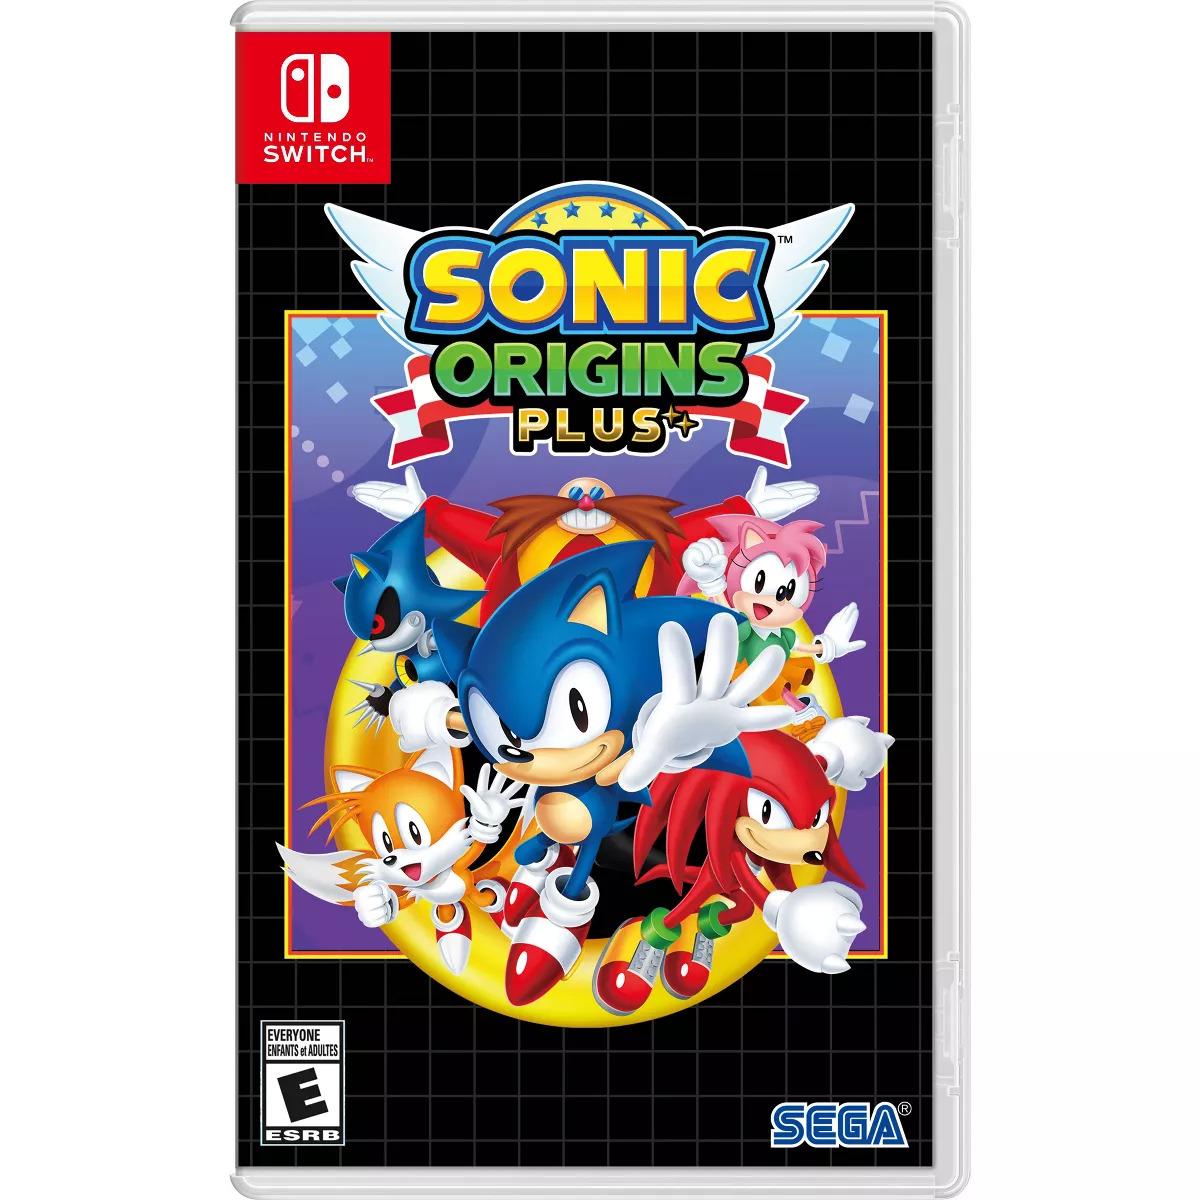 Sonic Origins Plus Nintendo Switch for $19.99